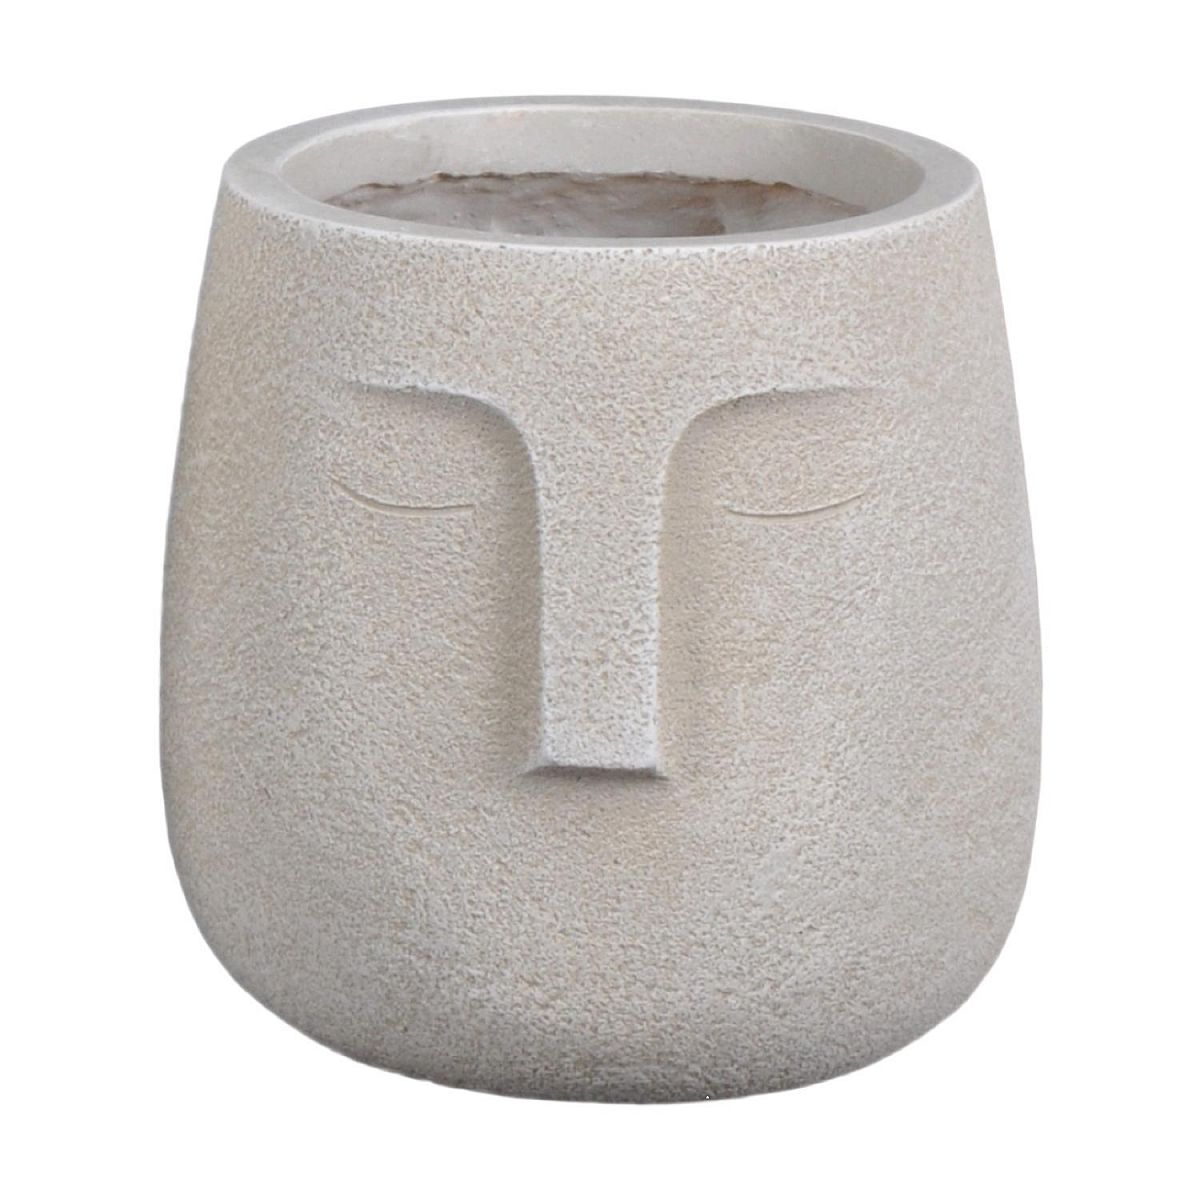 IDEALIST Lite Textured Concrete Effect Oval Indoor Face Pot